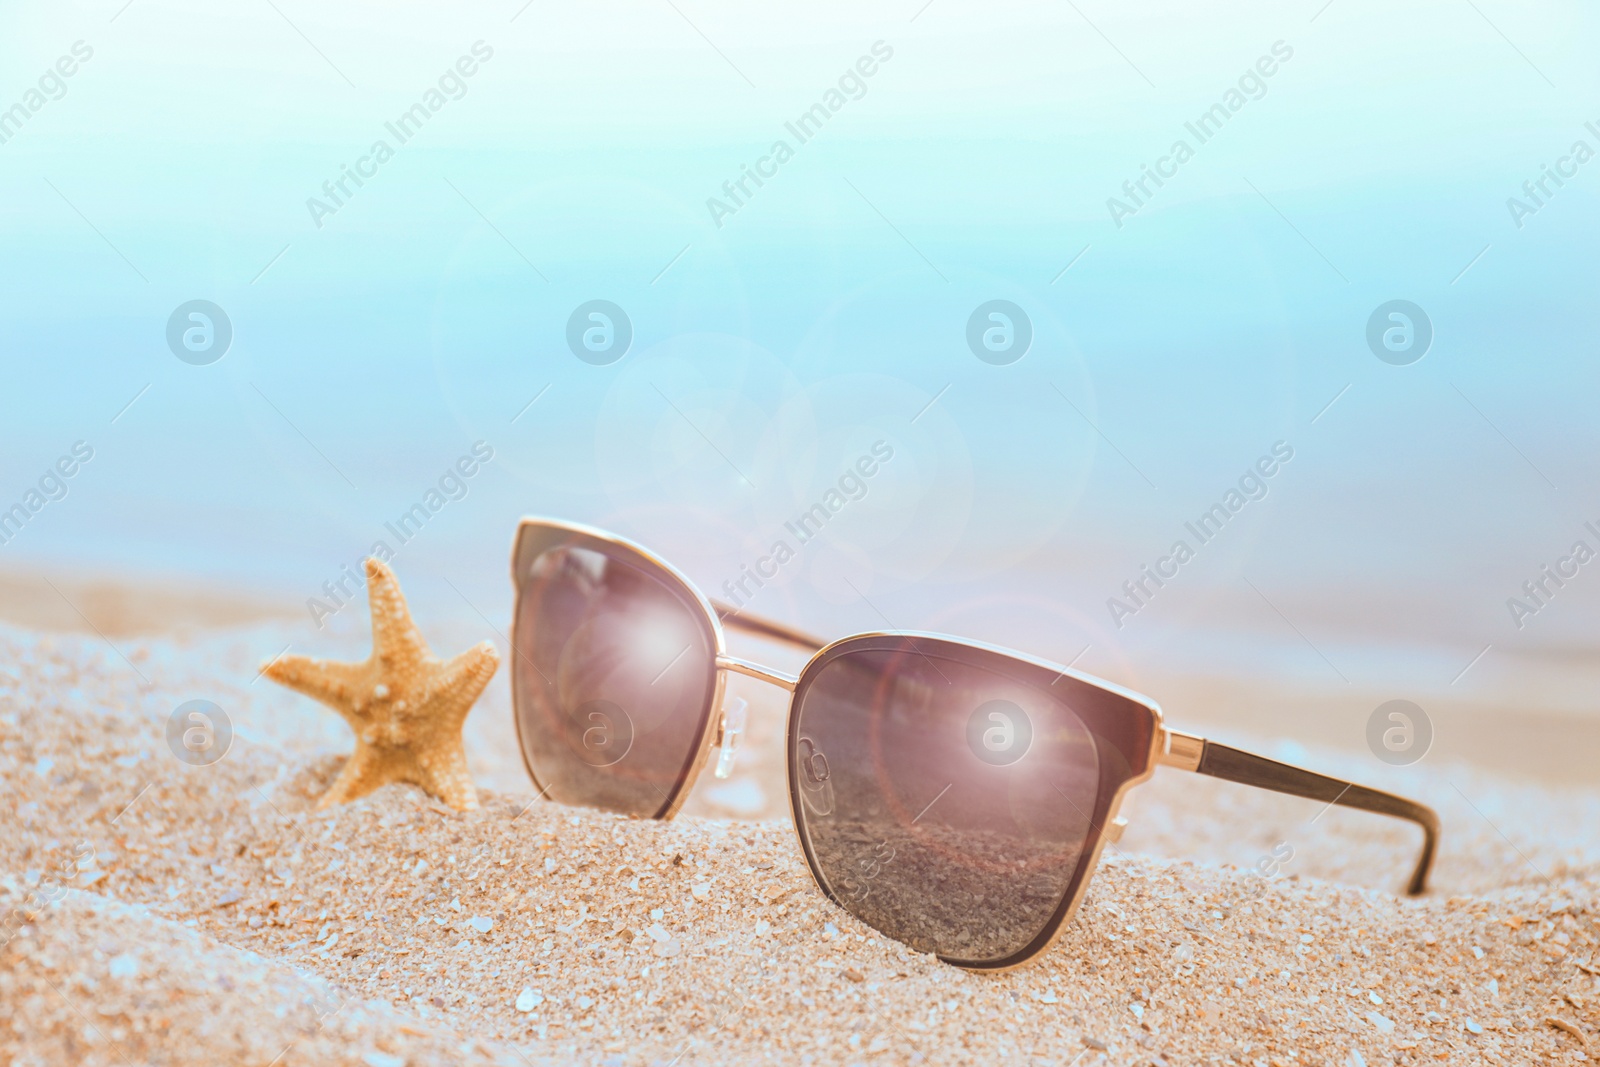 Photo of Stylish sunglasses and starfish on sandy beach